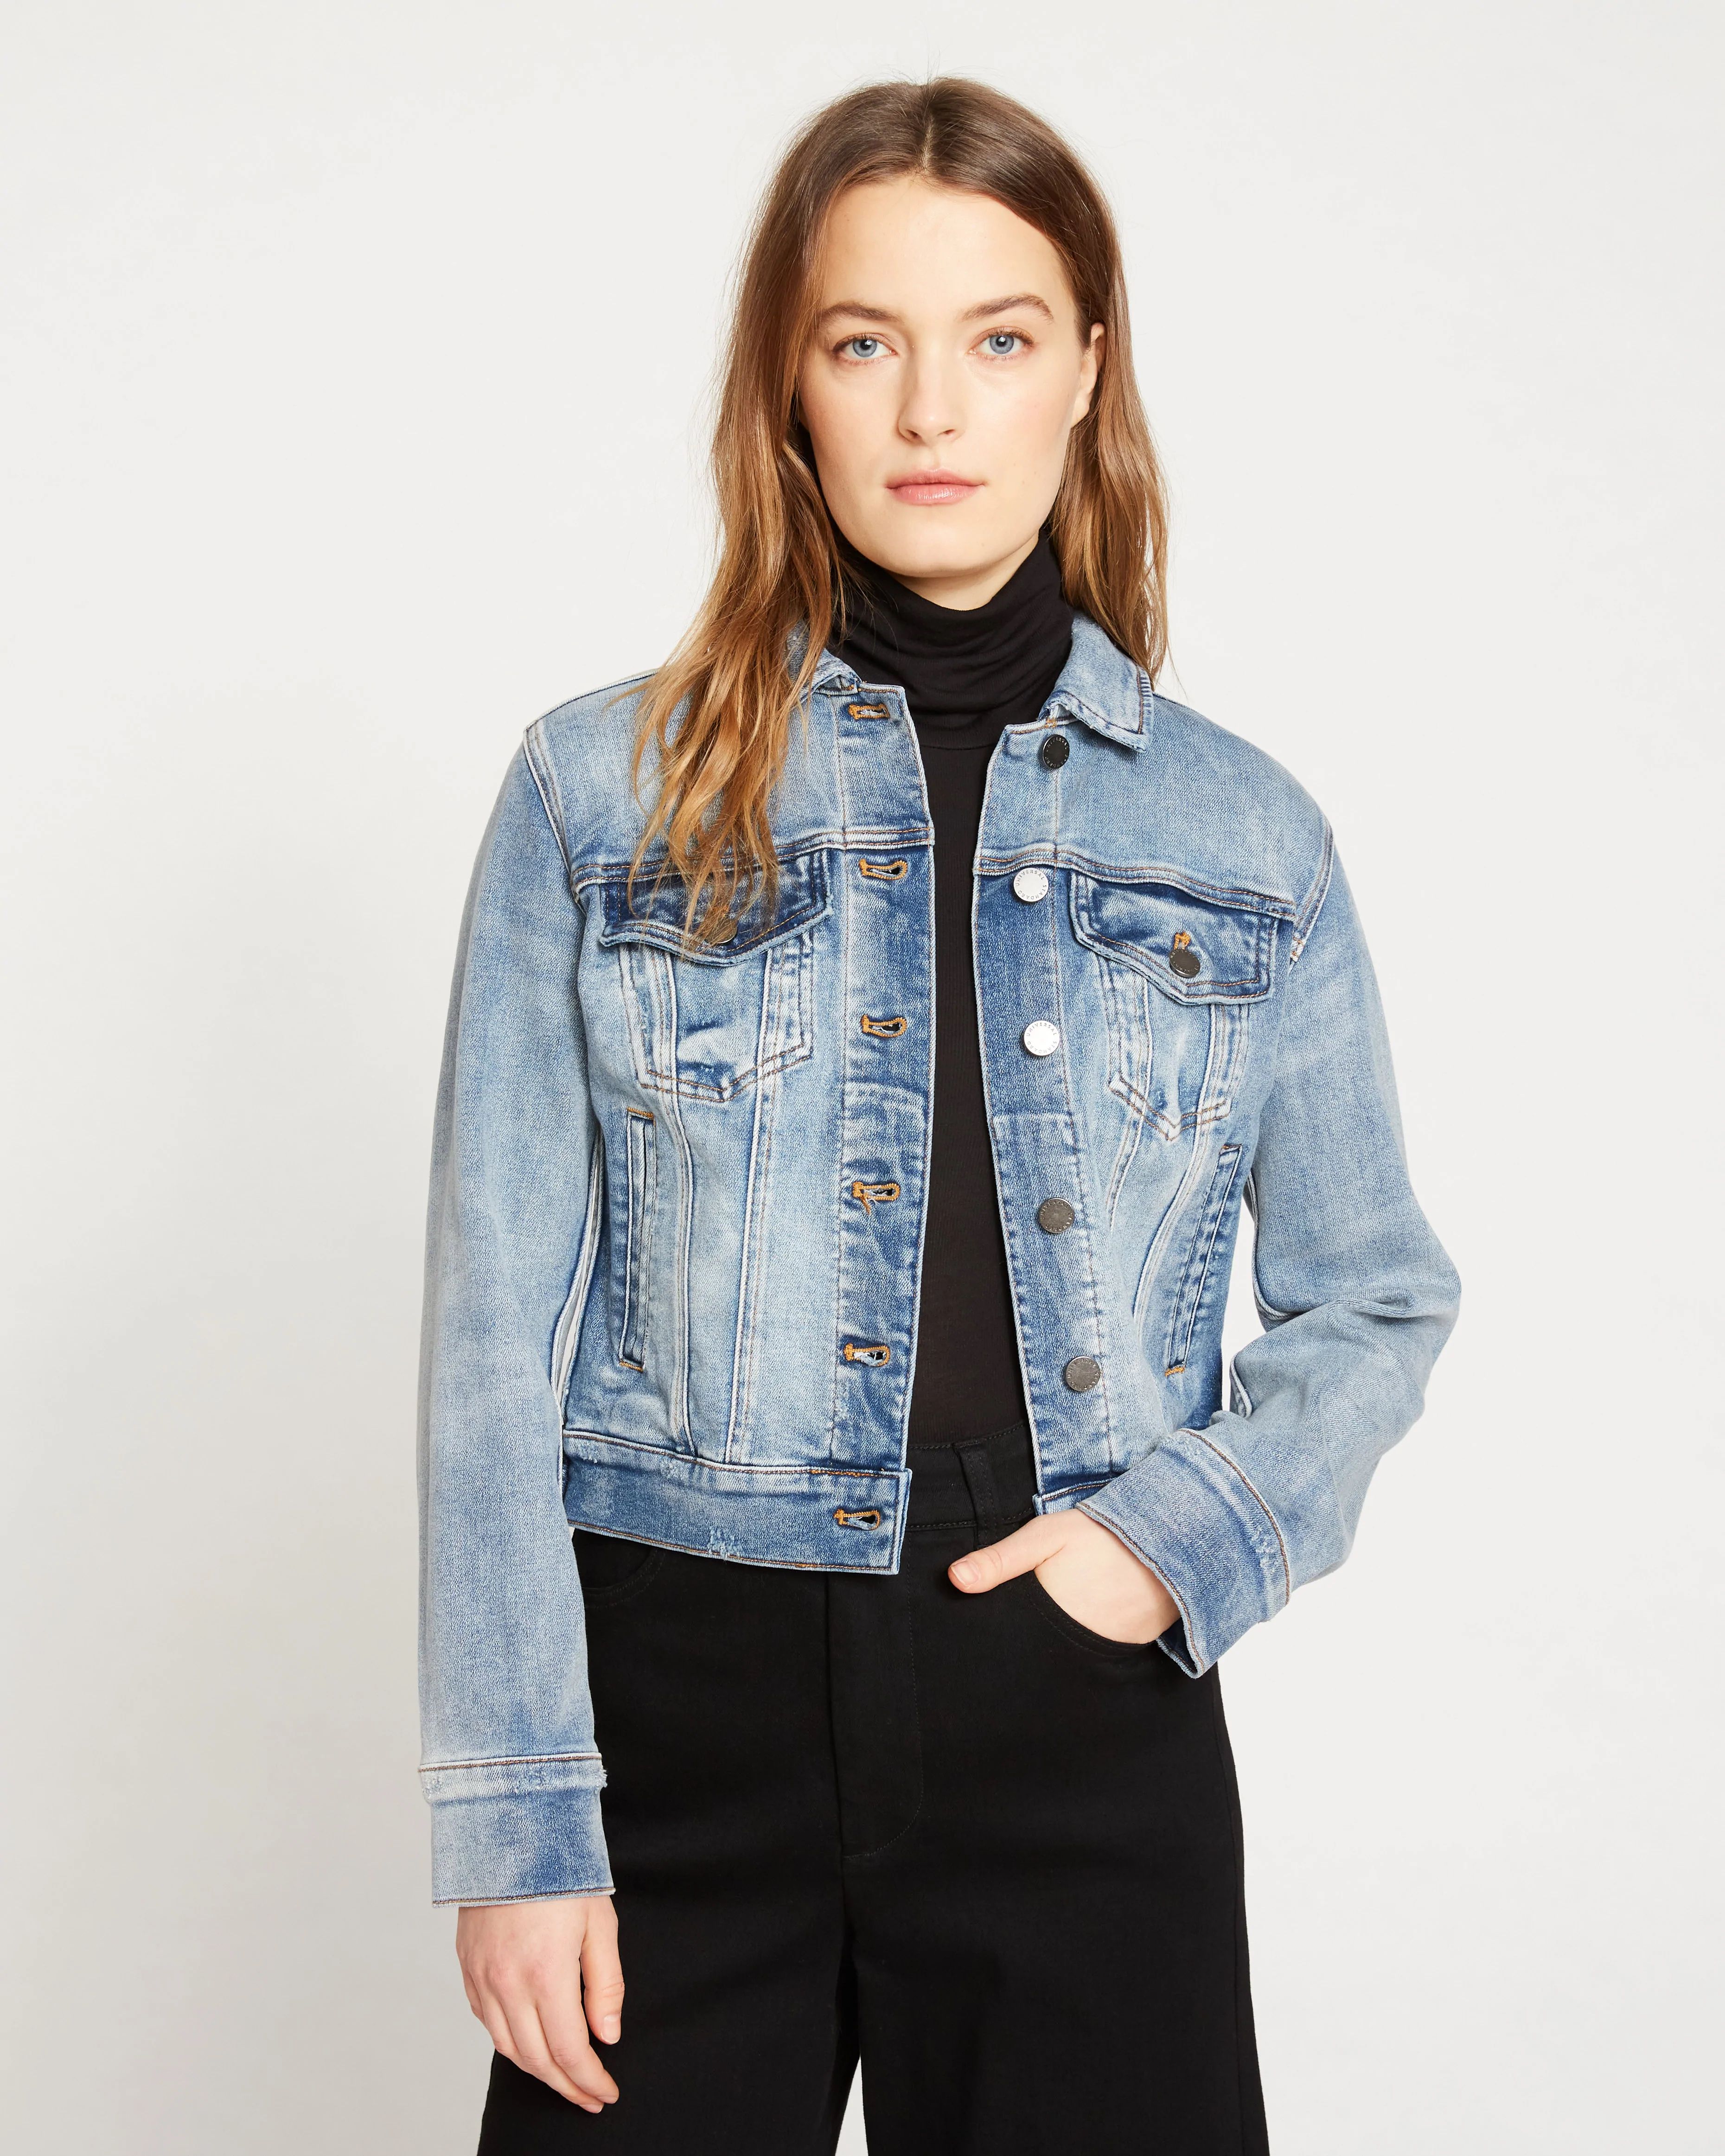 Lpstop Womens Jean Jacket Girl with Style Denim Jacket Button Down Denim  Hoodie Gift for Teens at Amazon Women's Coats Shop